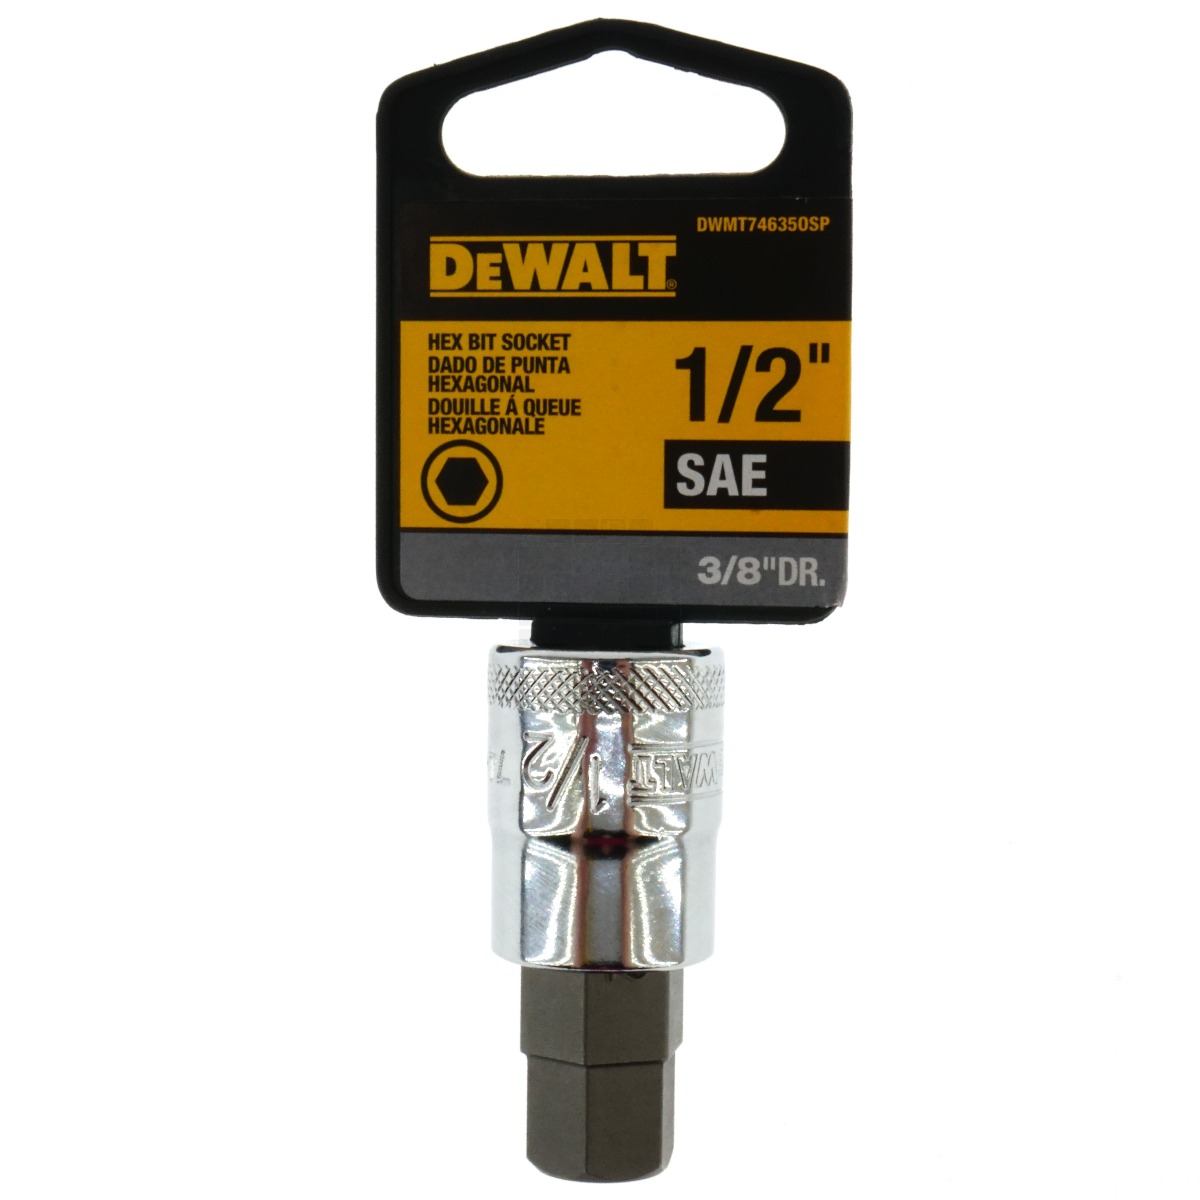 Dewalt DWMT74635OSP 1/2" Chrome Hex Bit Socket, 3/8" Drive, 74-635D